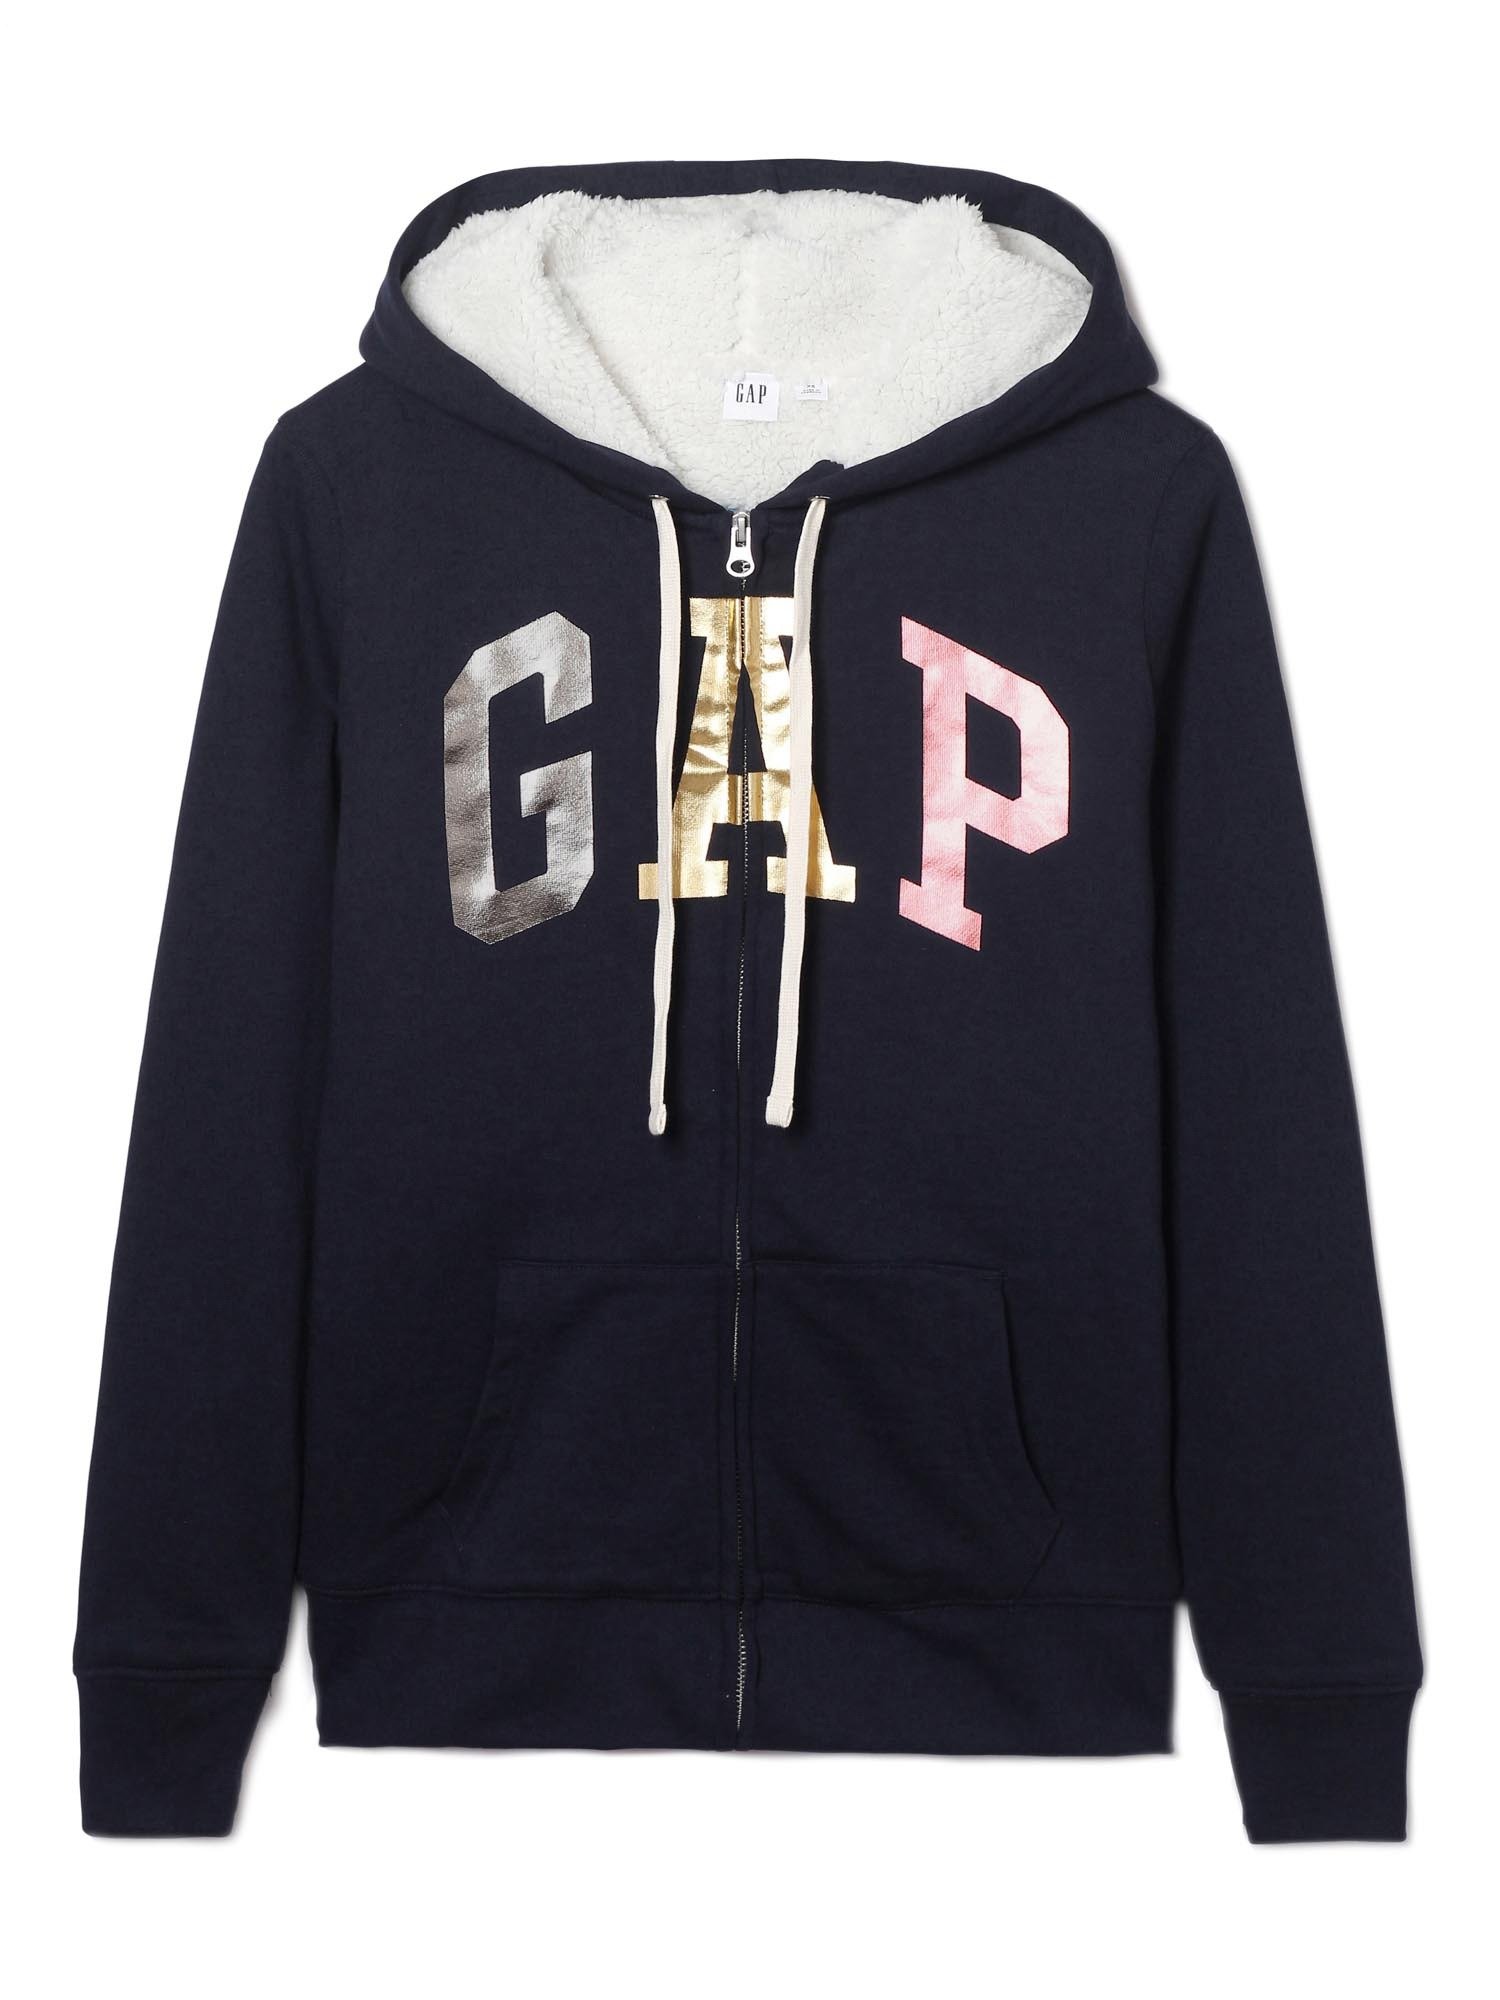 Gap Logo Astarlı Sweatshirt product image